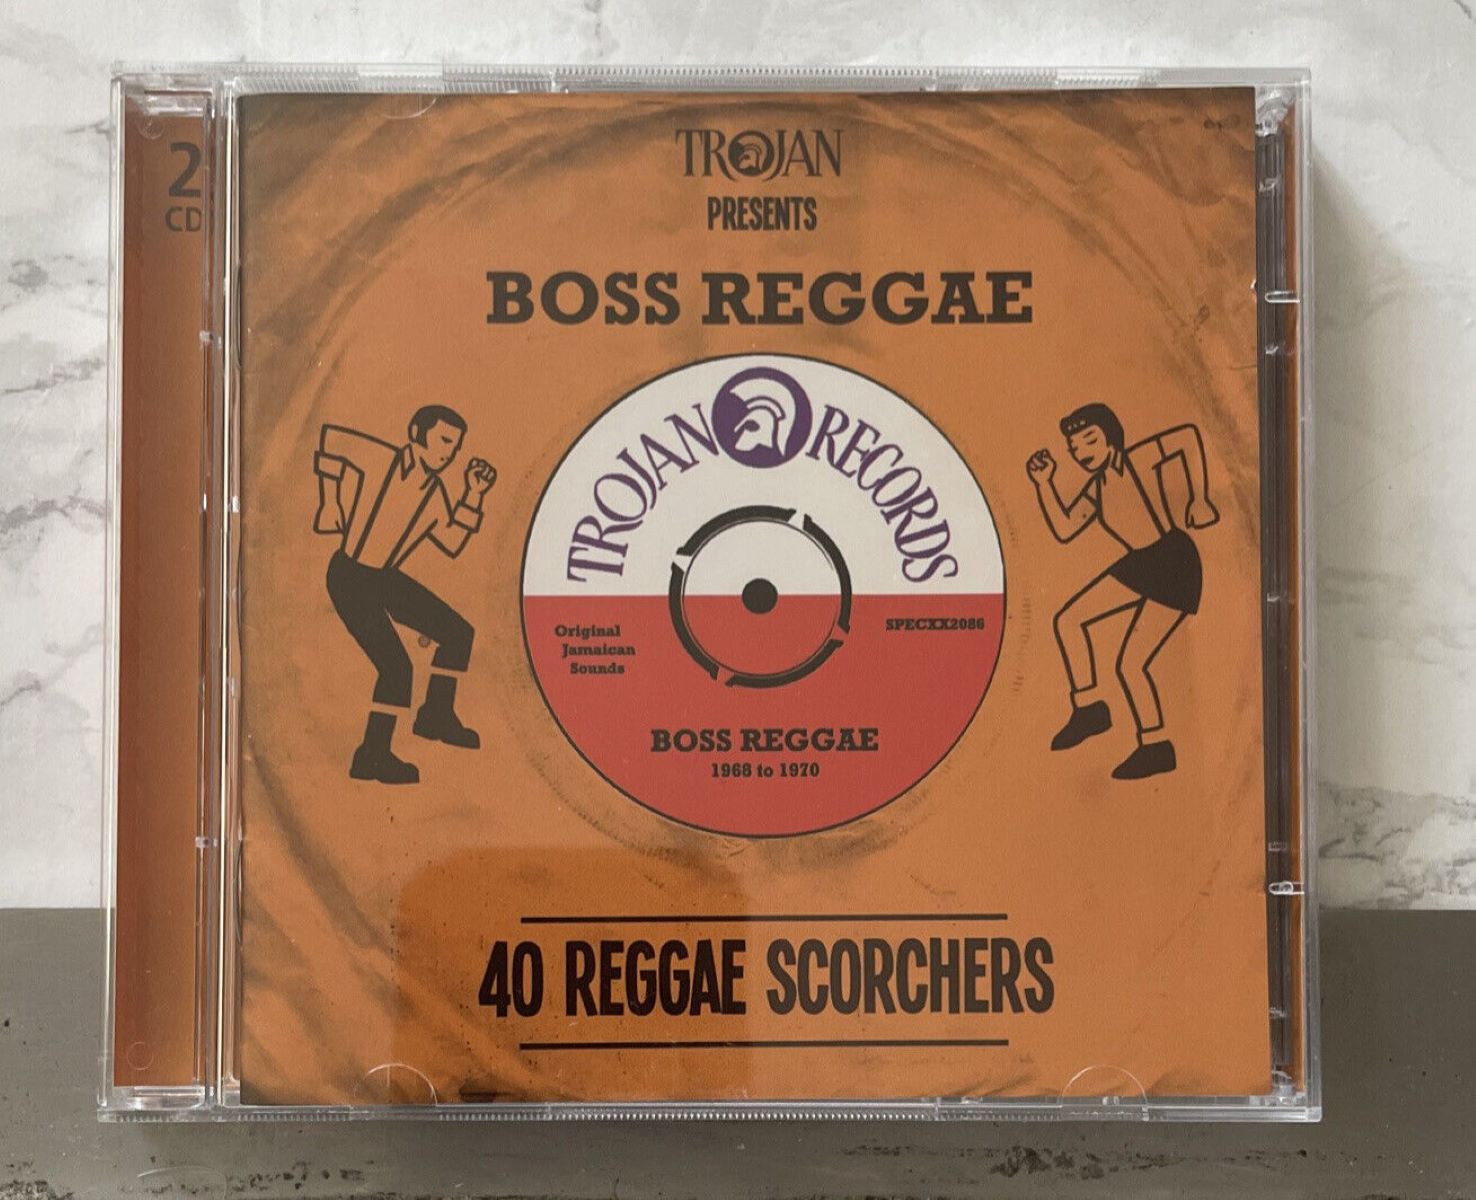 When Was The Boss Reggae Sound First Prevalent?